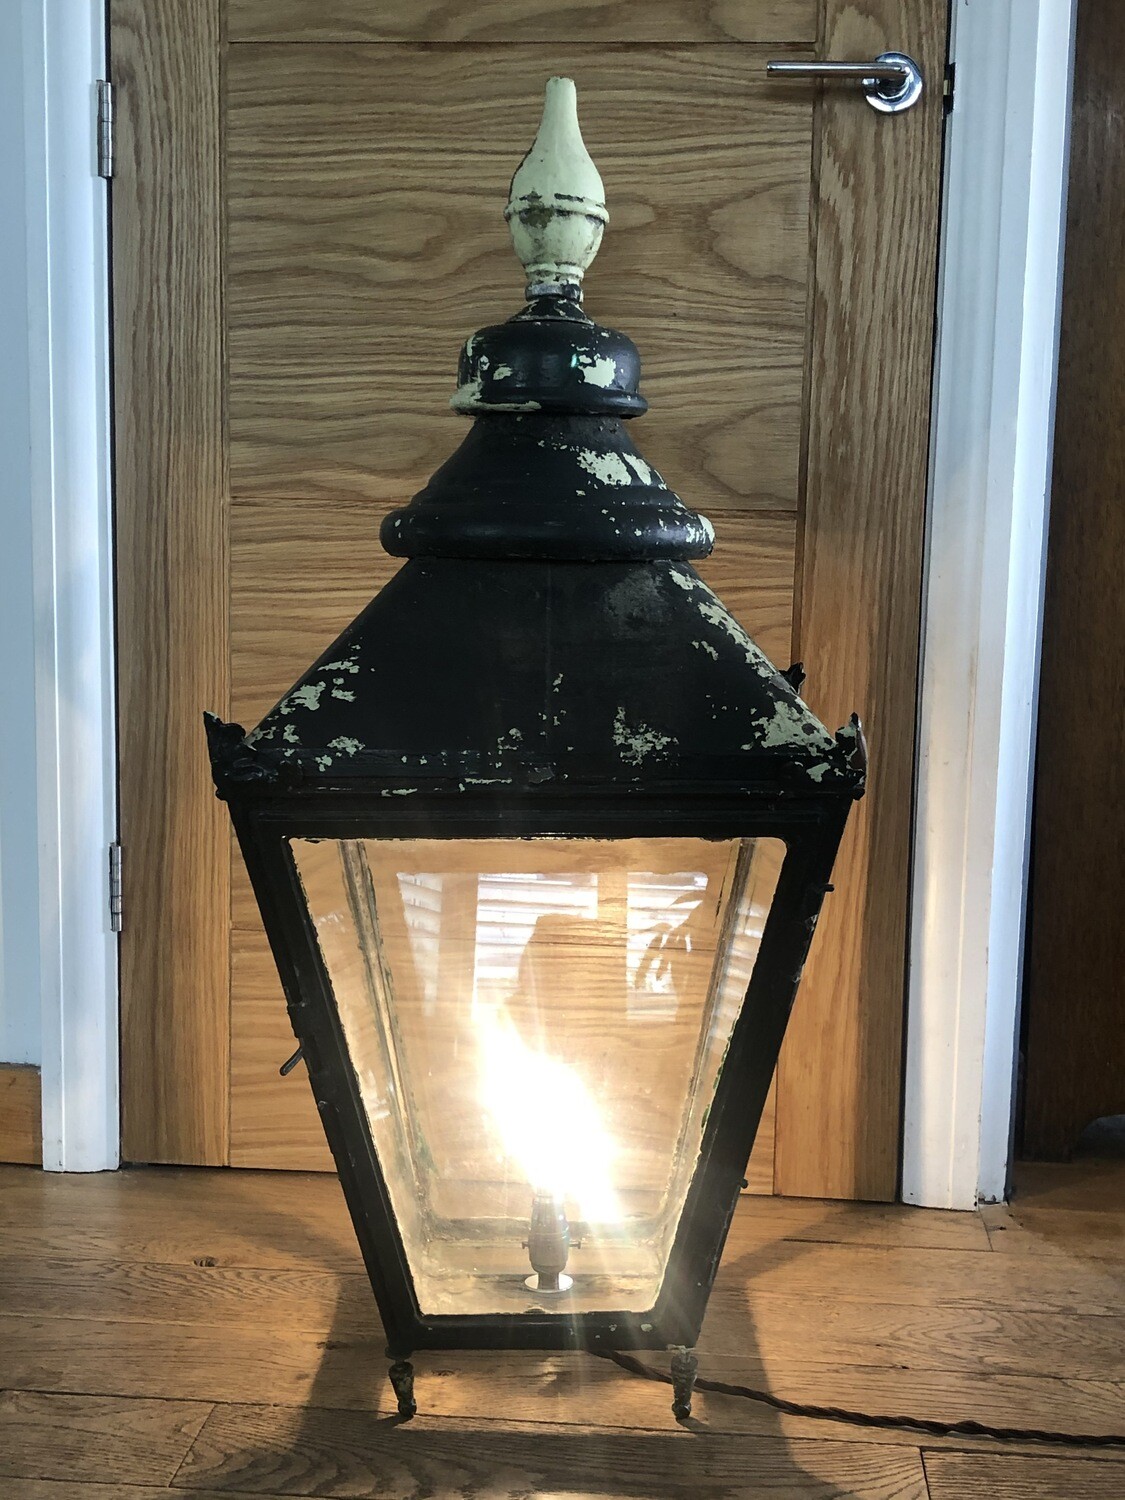 Vintage street lantern converted into lamp